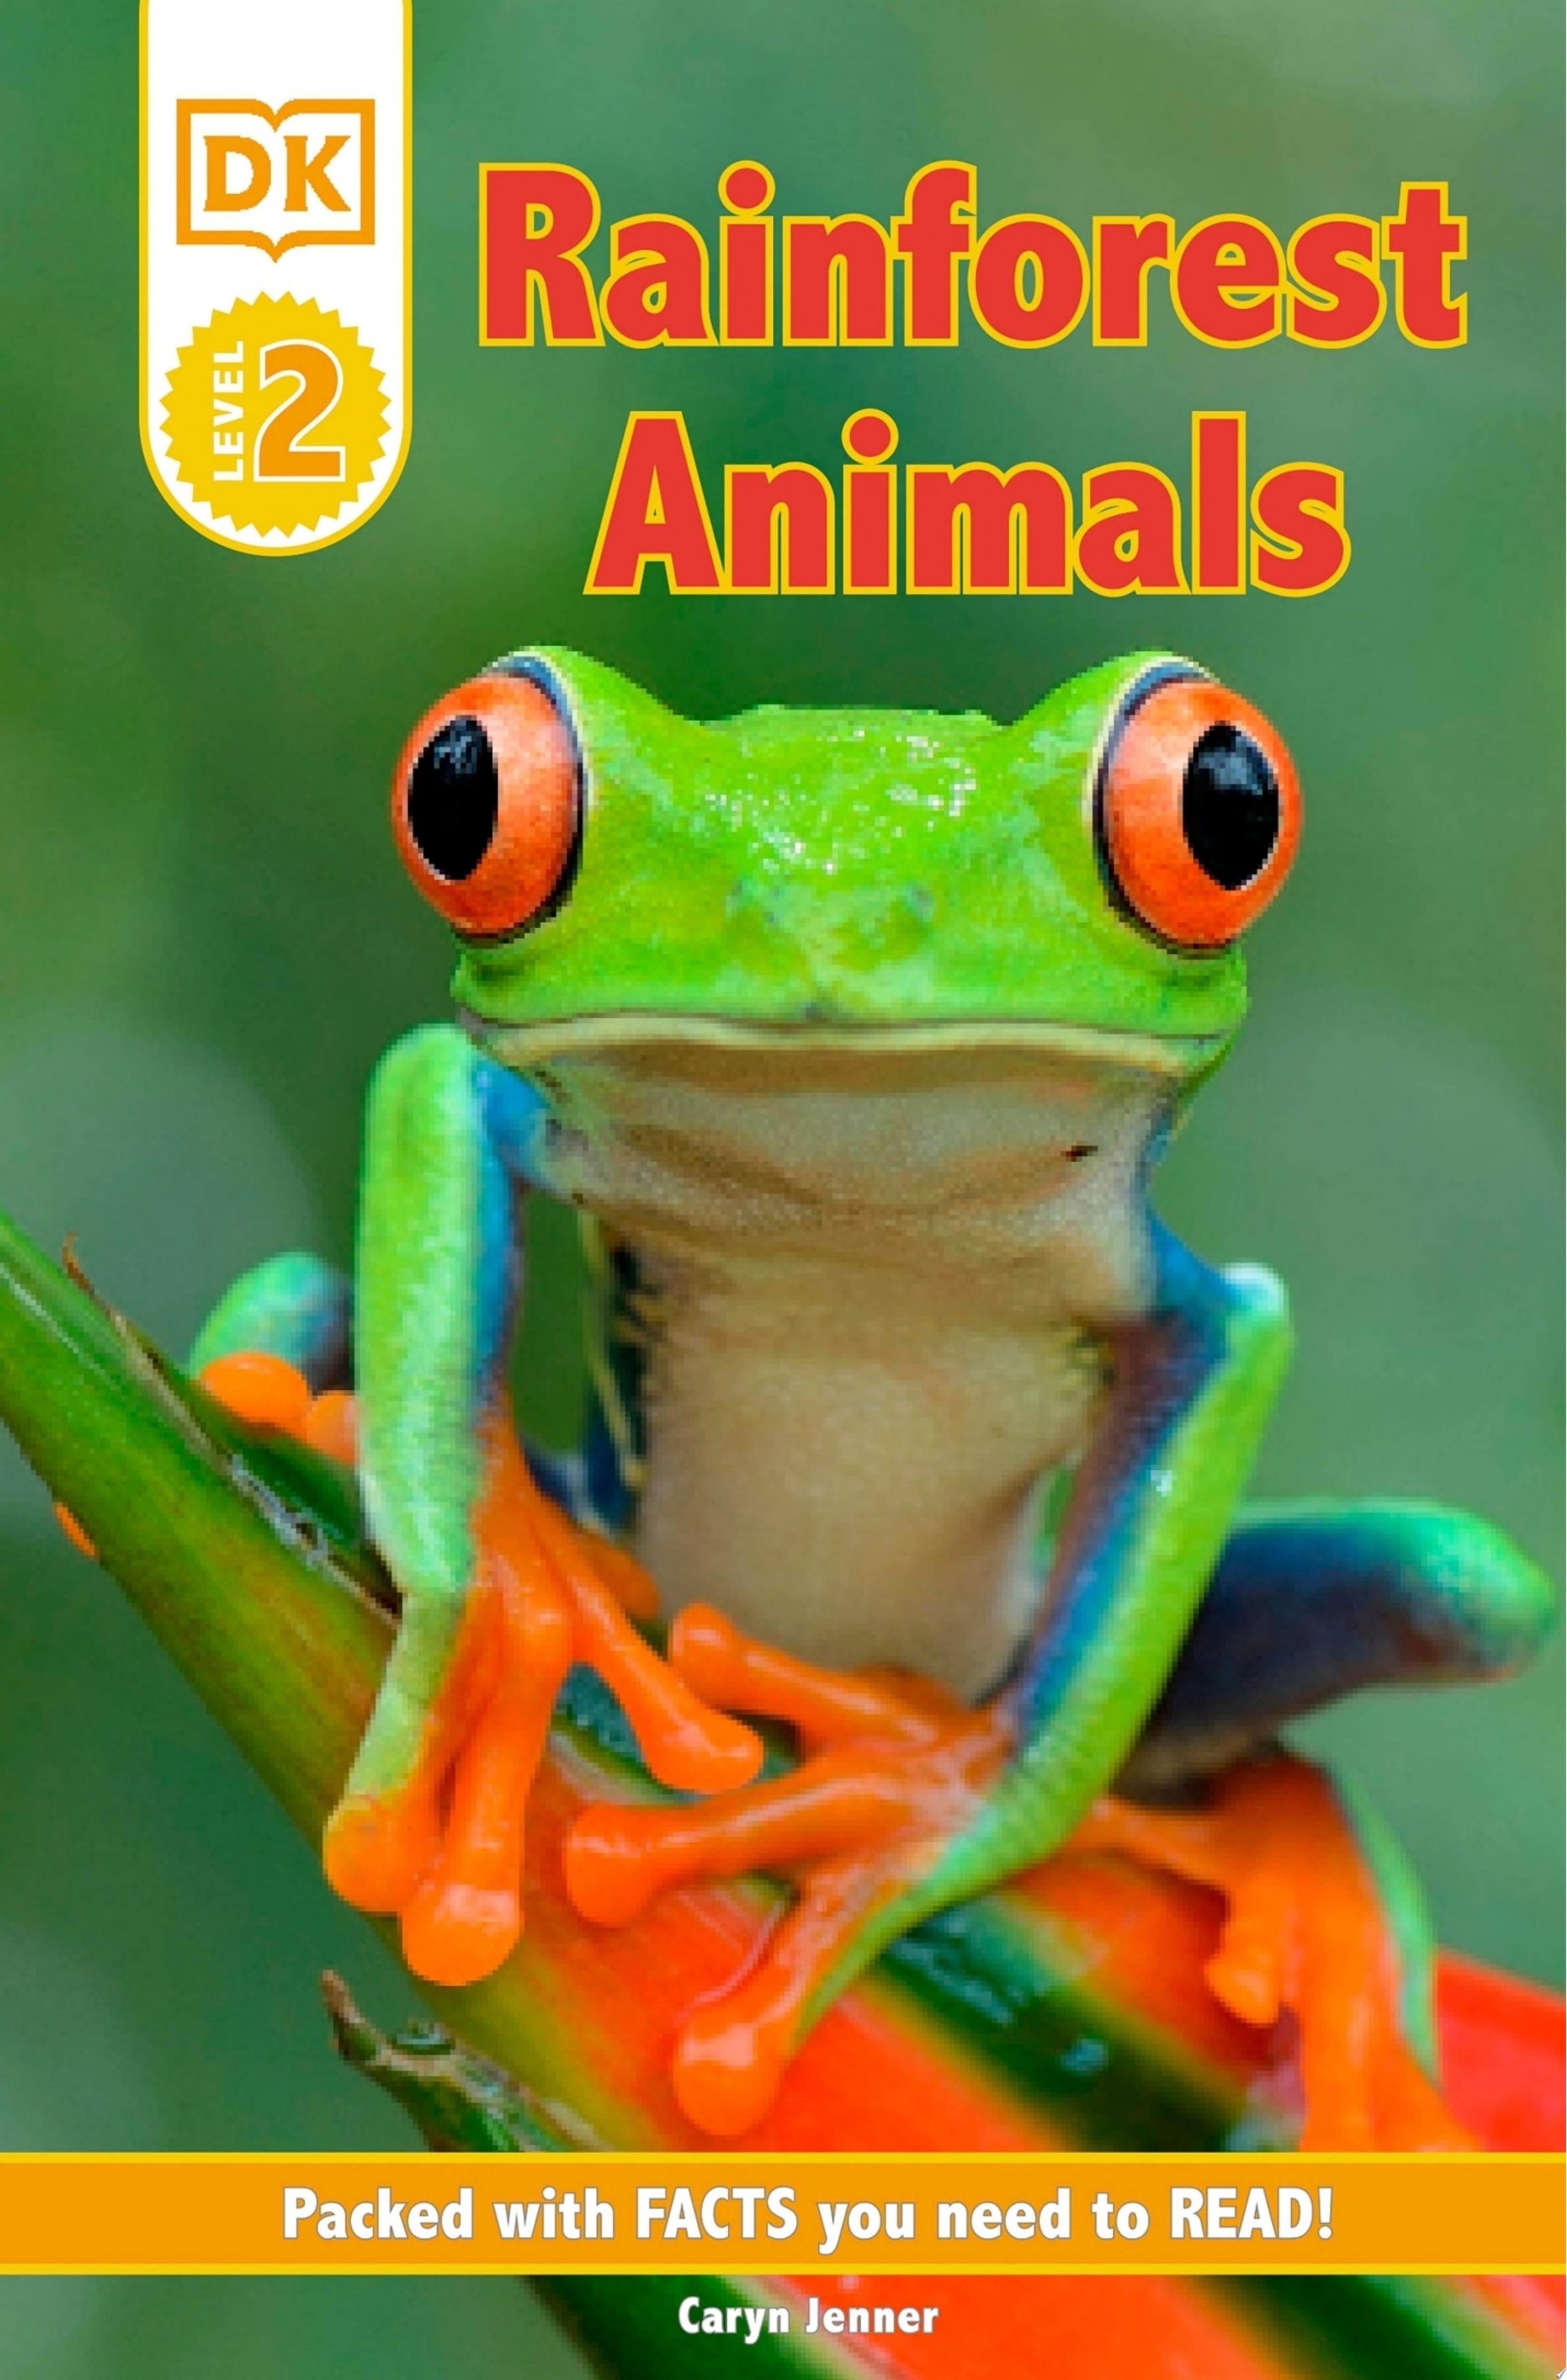 Image for "DK Reader Level 2: Rainforest Animals"